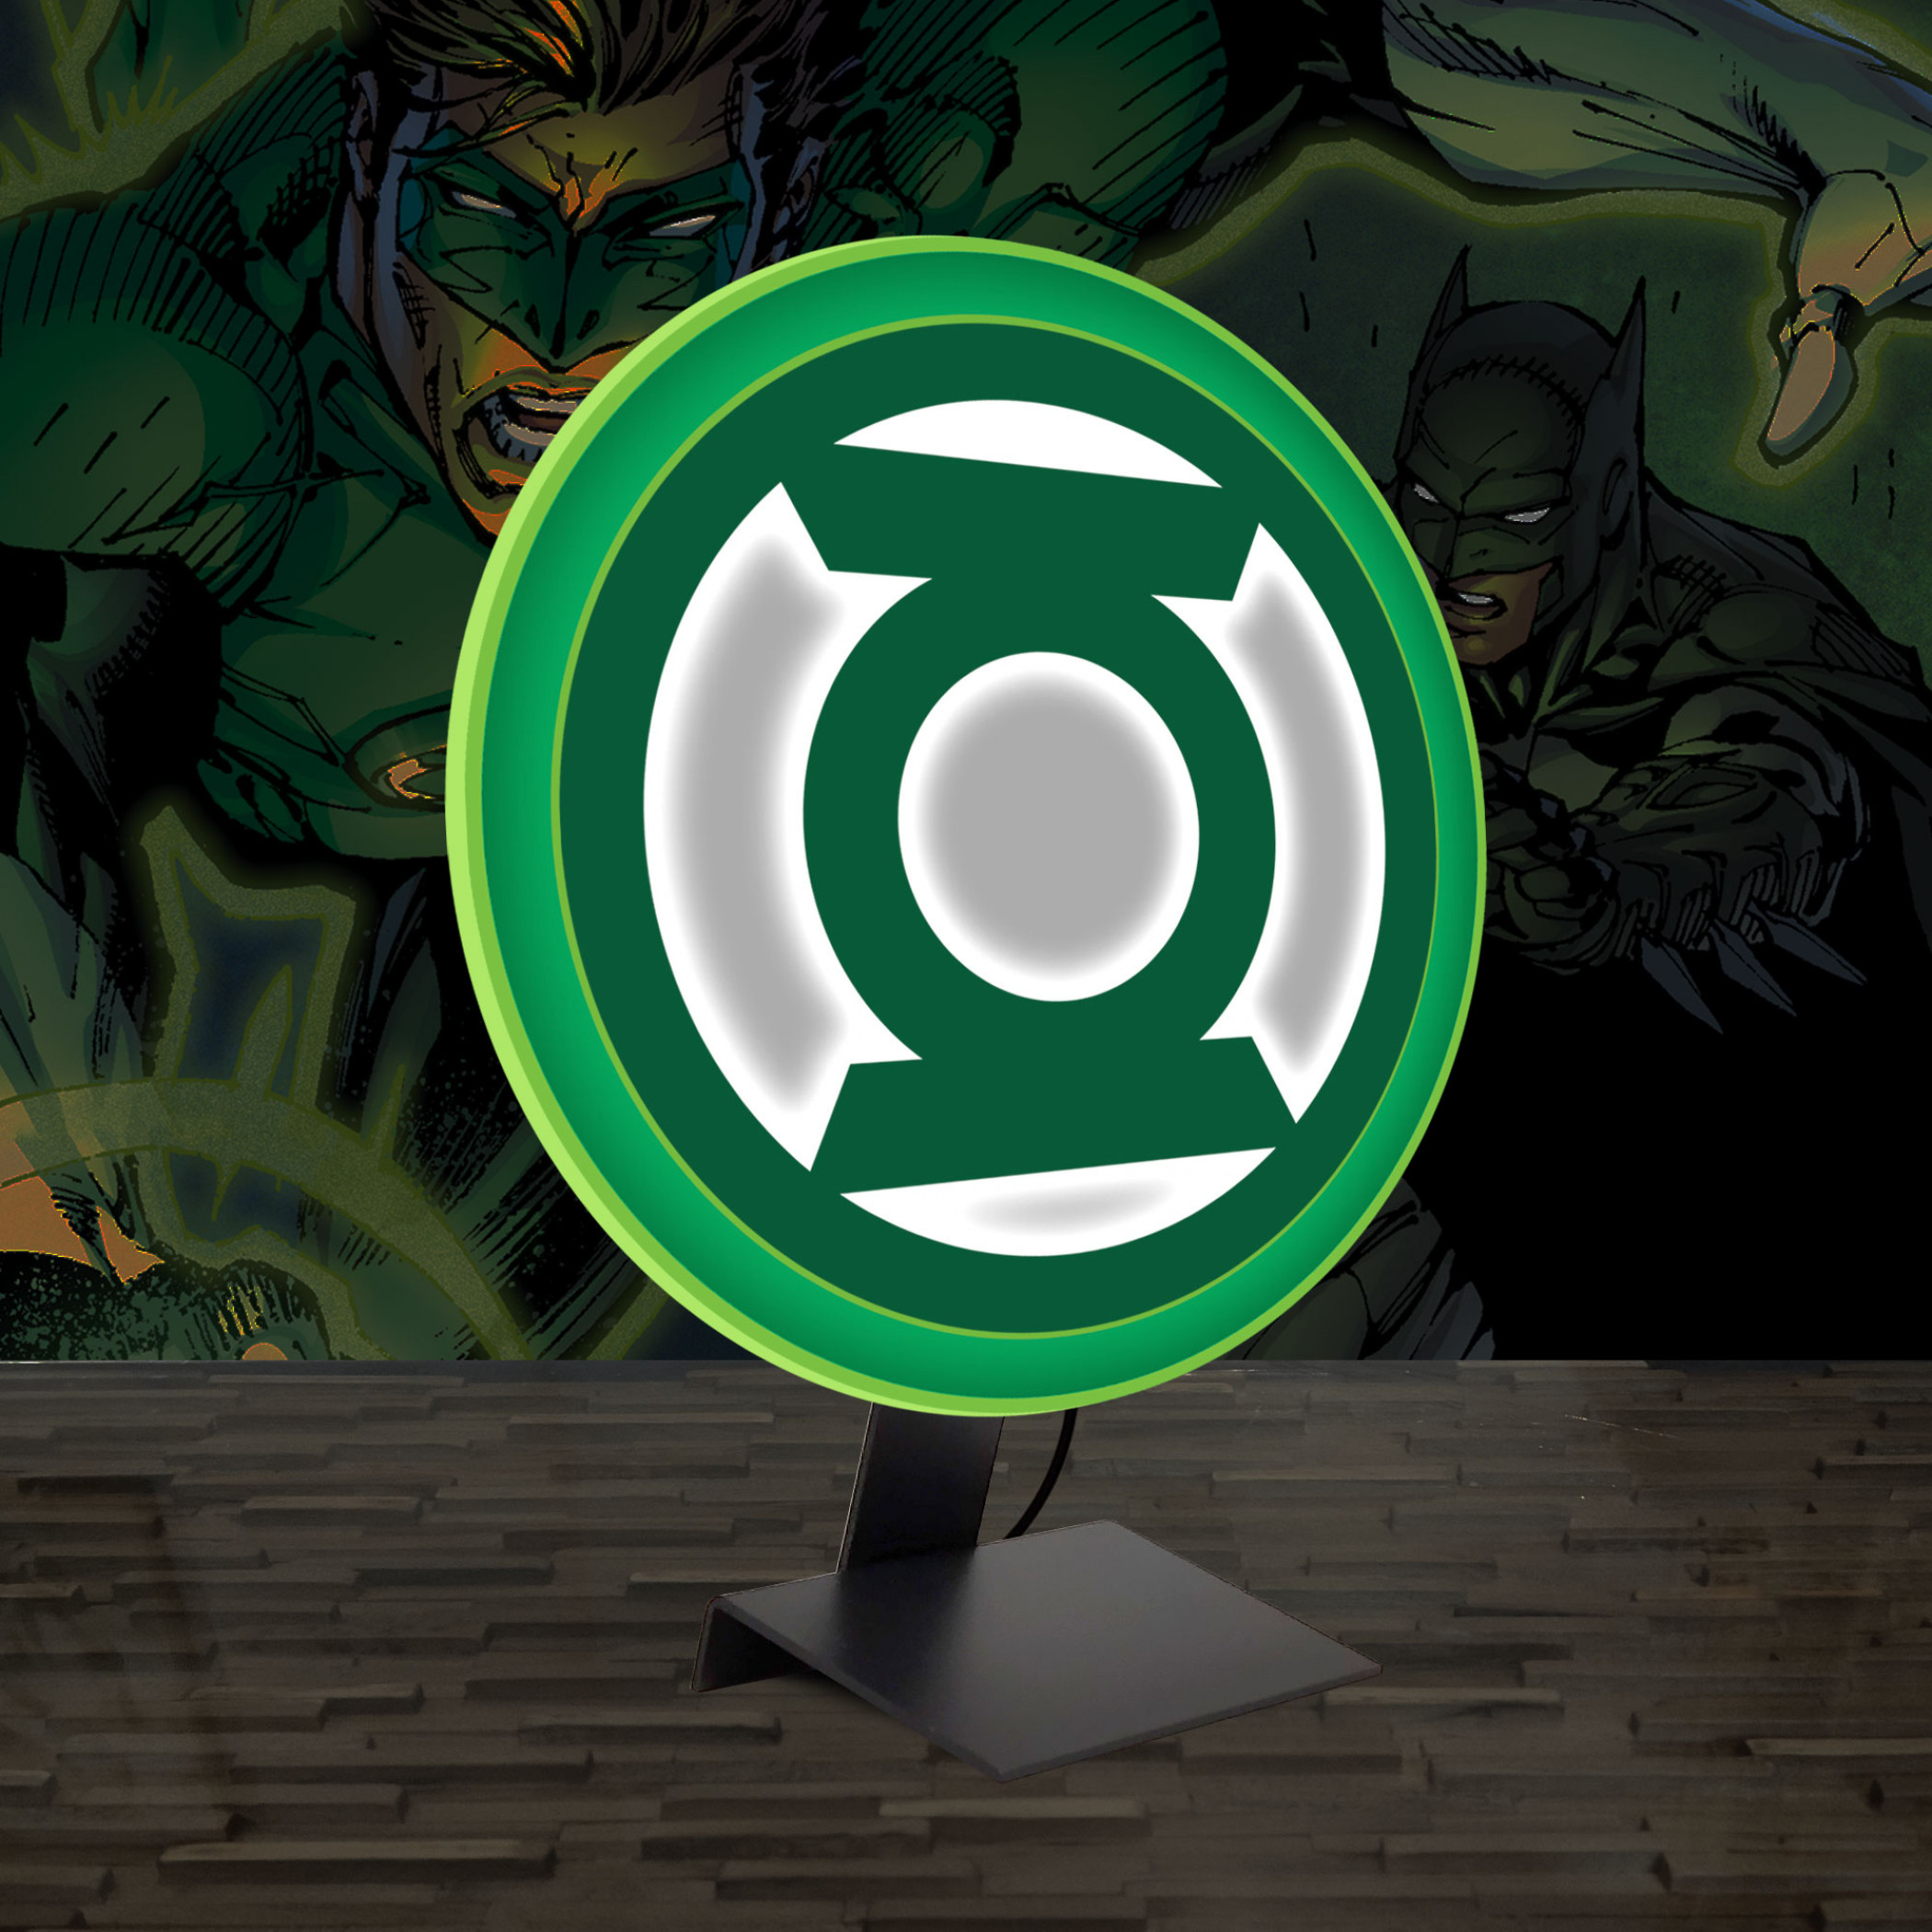 Green Lantern Symbol Illuminated Table Lamp or Mountable Wall Lamp